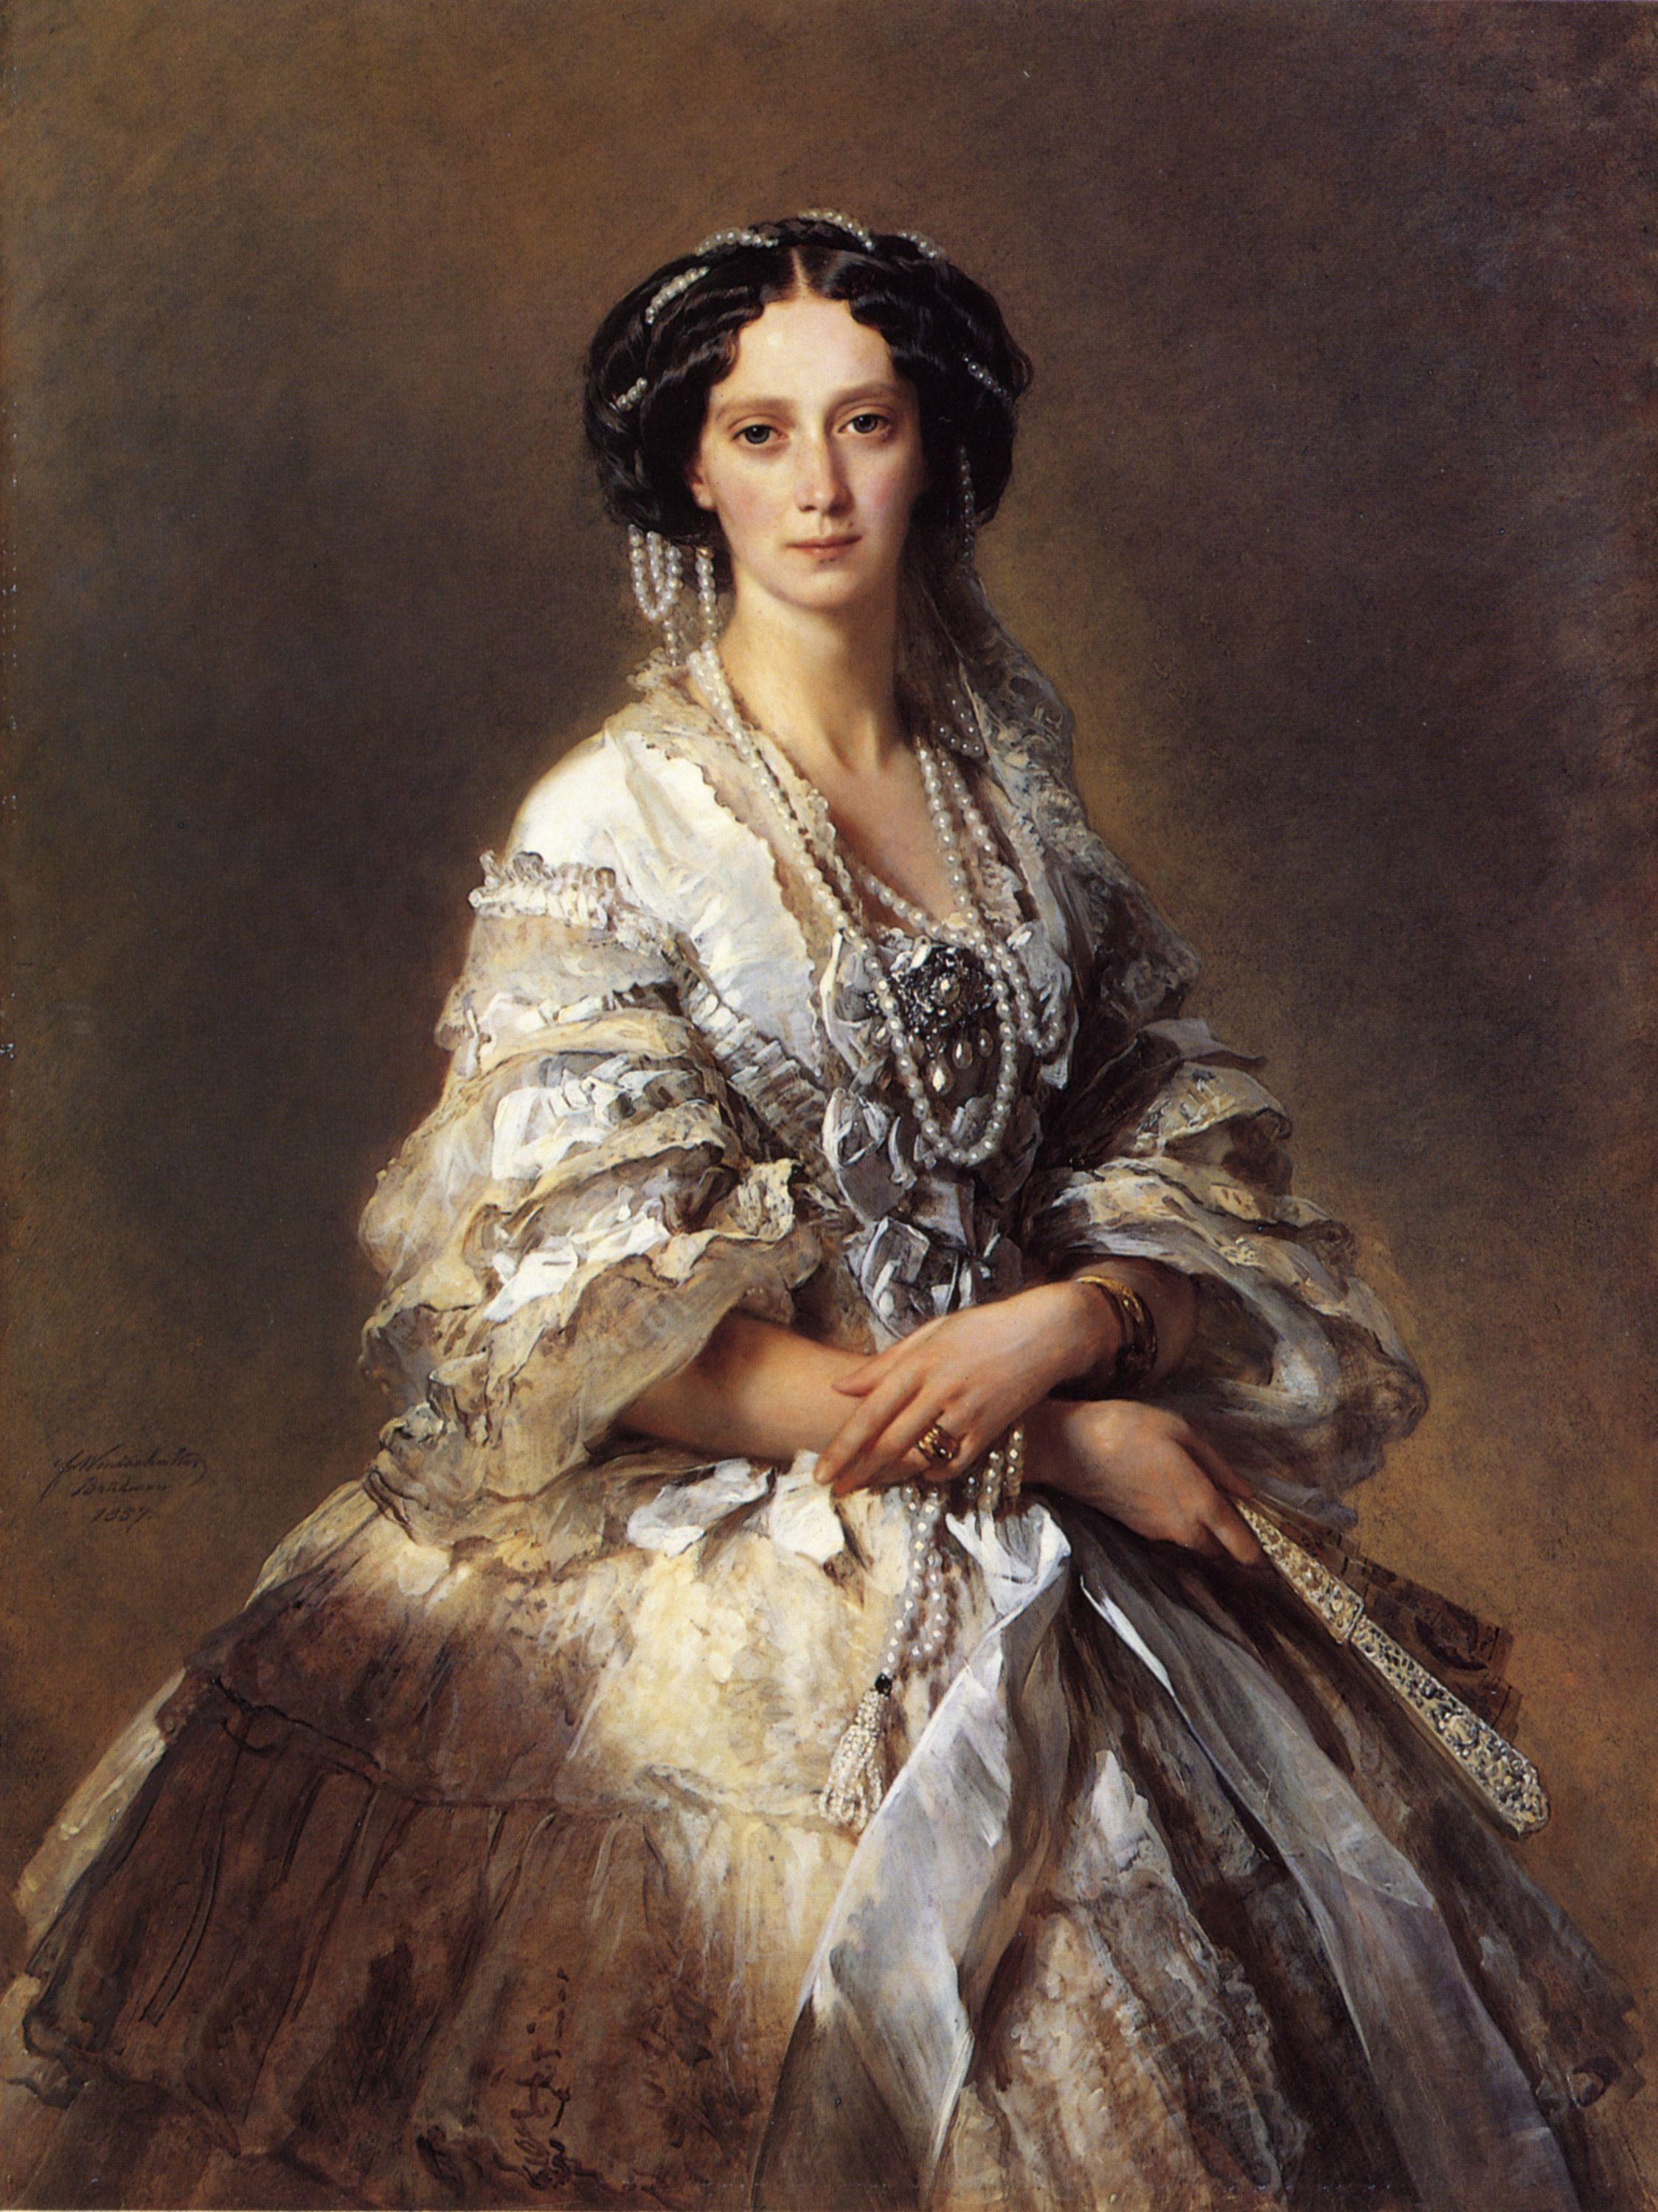 The Empress Maria Alexandrovna of Russia by Franz Xavier Winterhalter